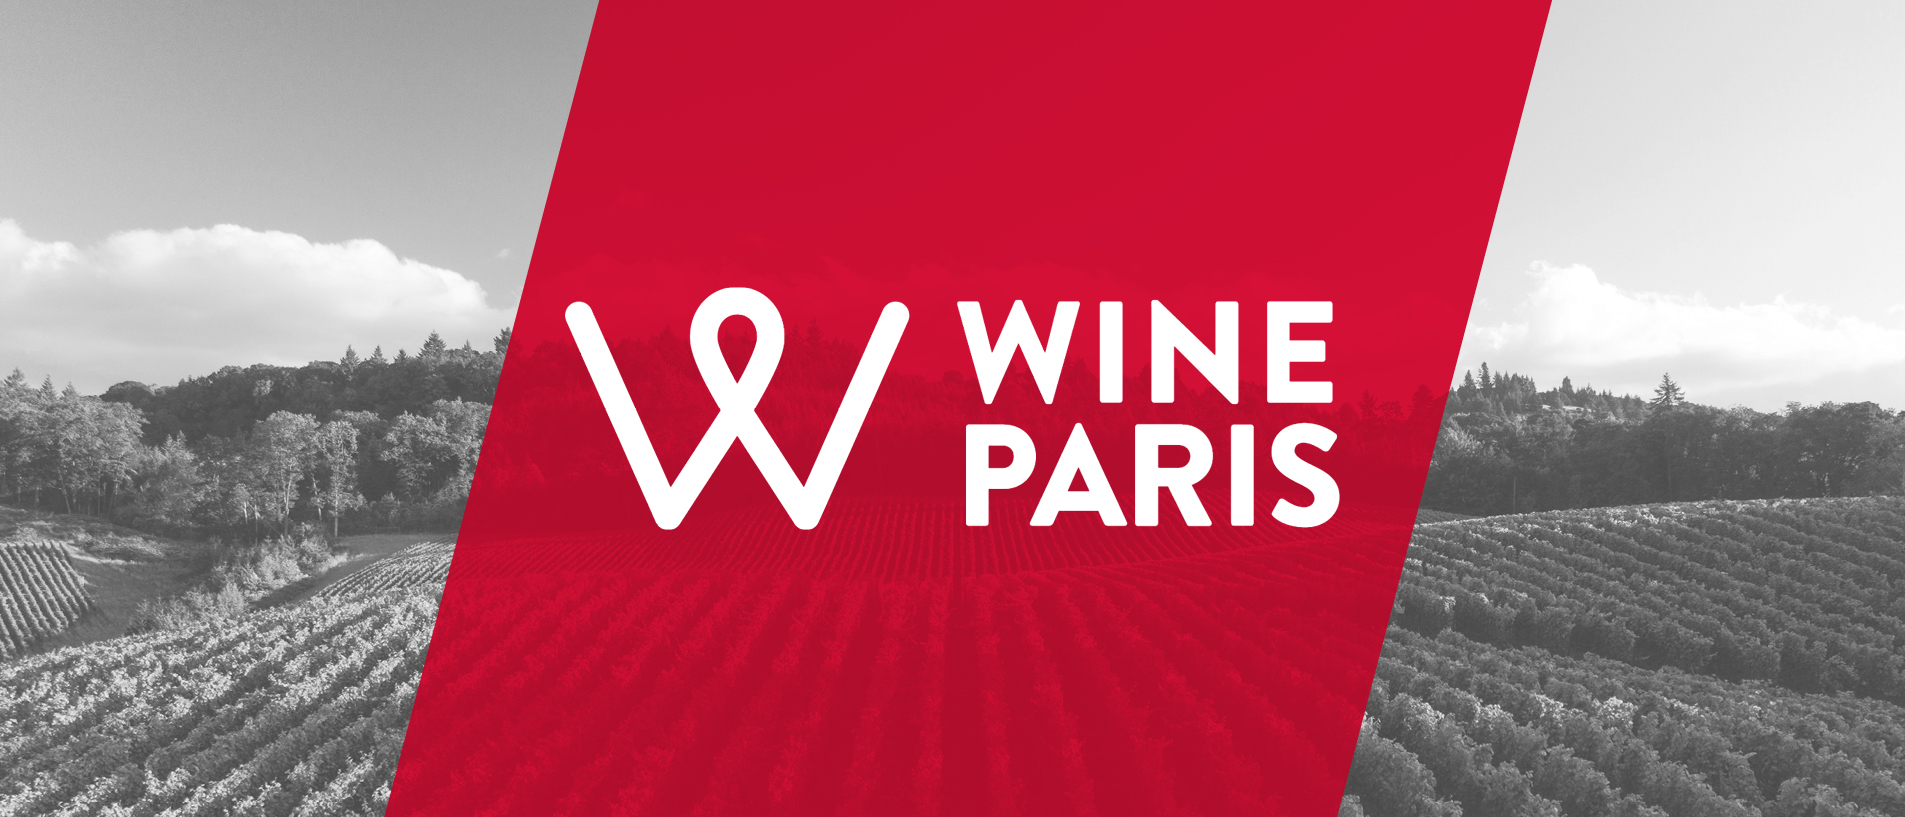 zenotheque_news_wine_paris